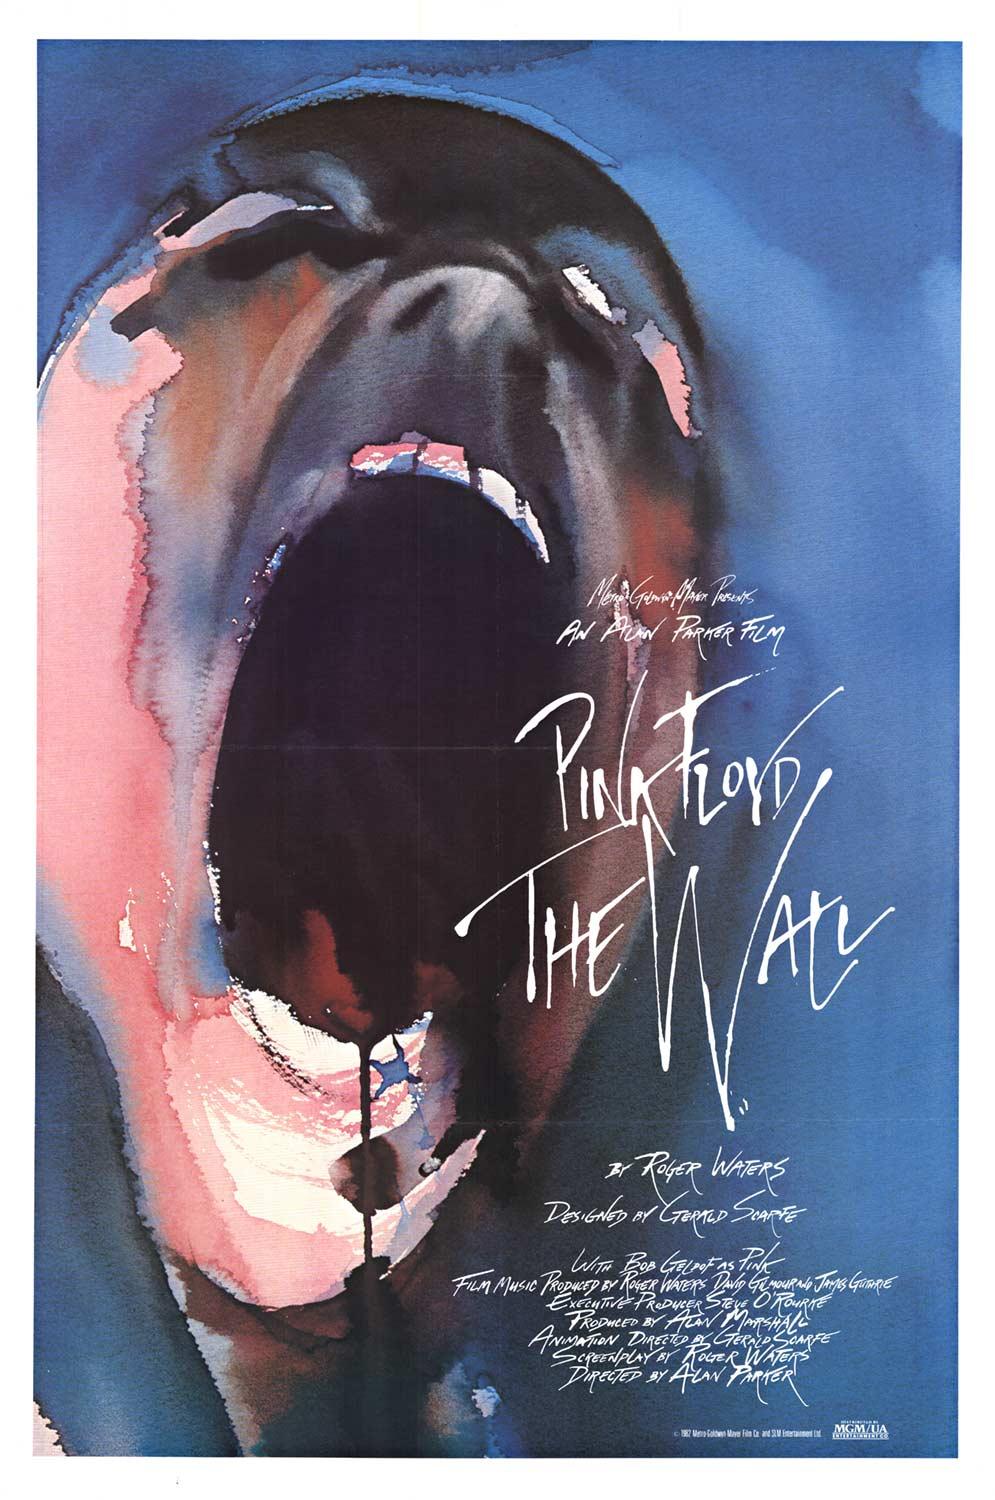 Gerald Scarfe Print - Original "Pink Floyd The Wall" vintage 1982 movie poster